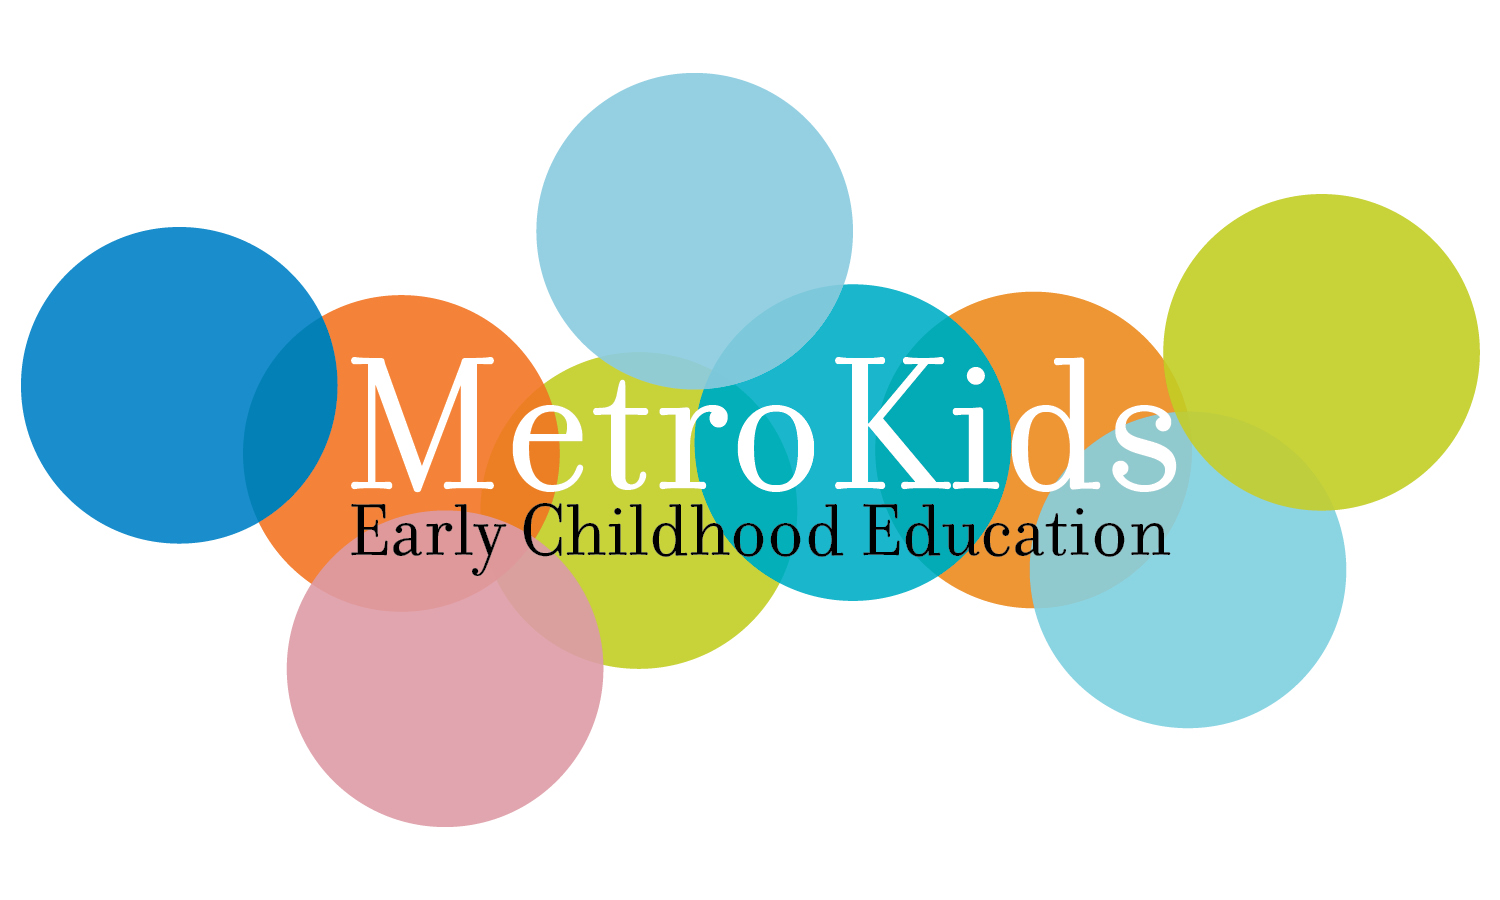 MetroKids Childcare Center in Downtown Minneapolis